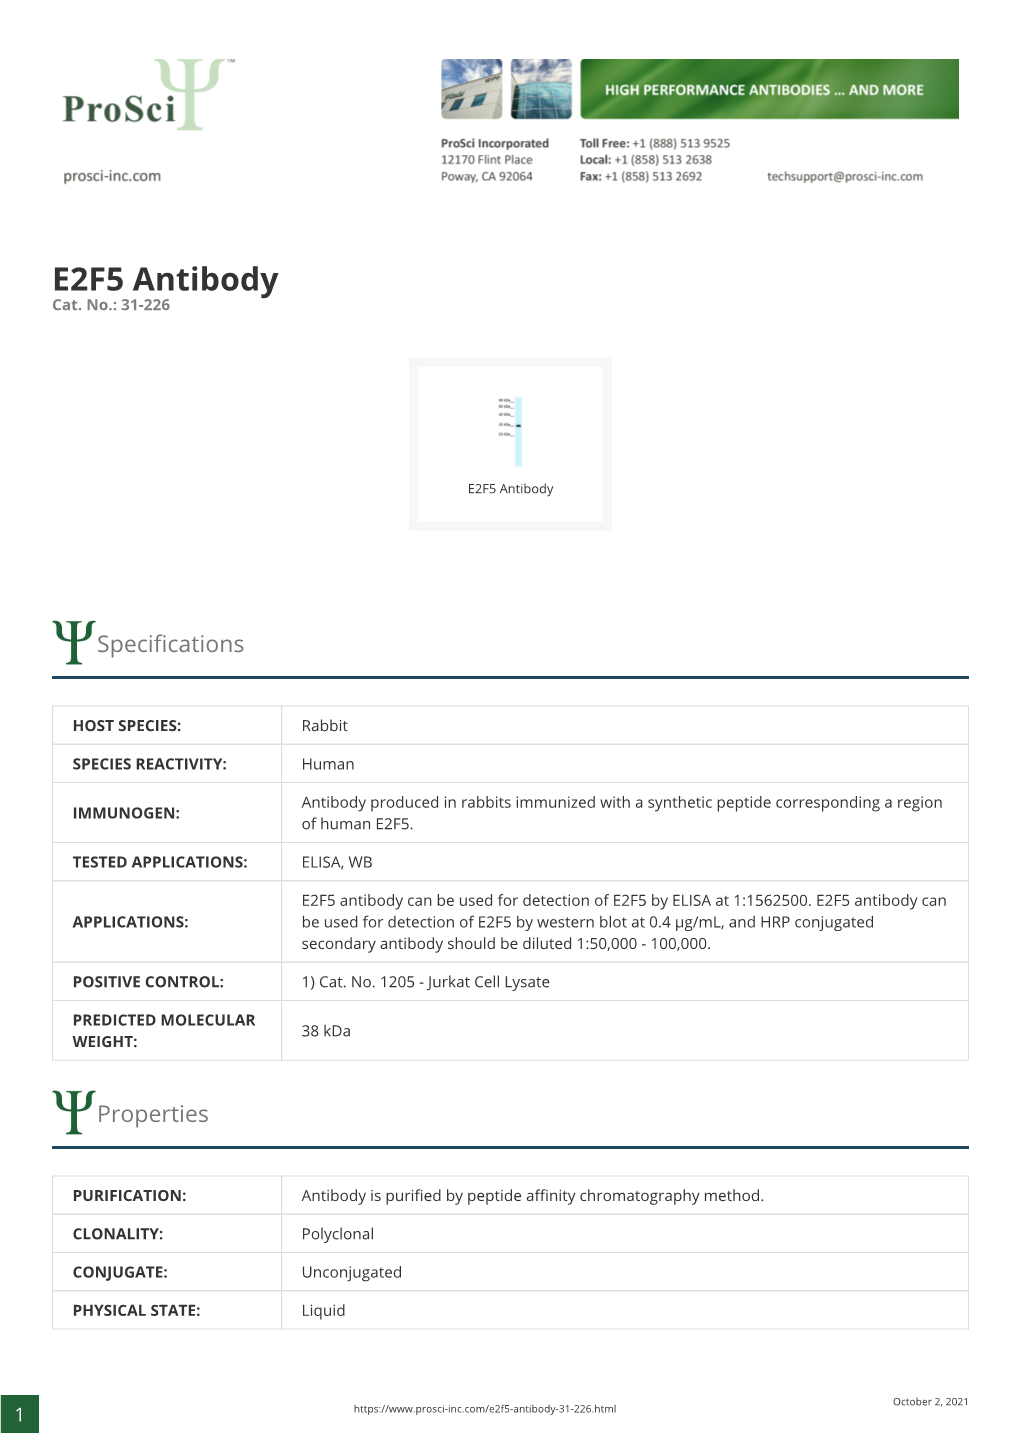 E2F5 Antibody Cat